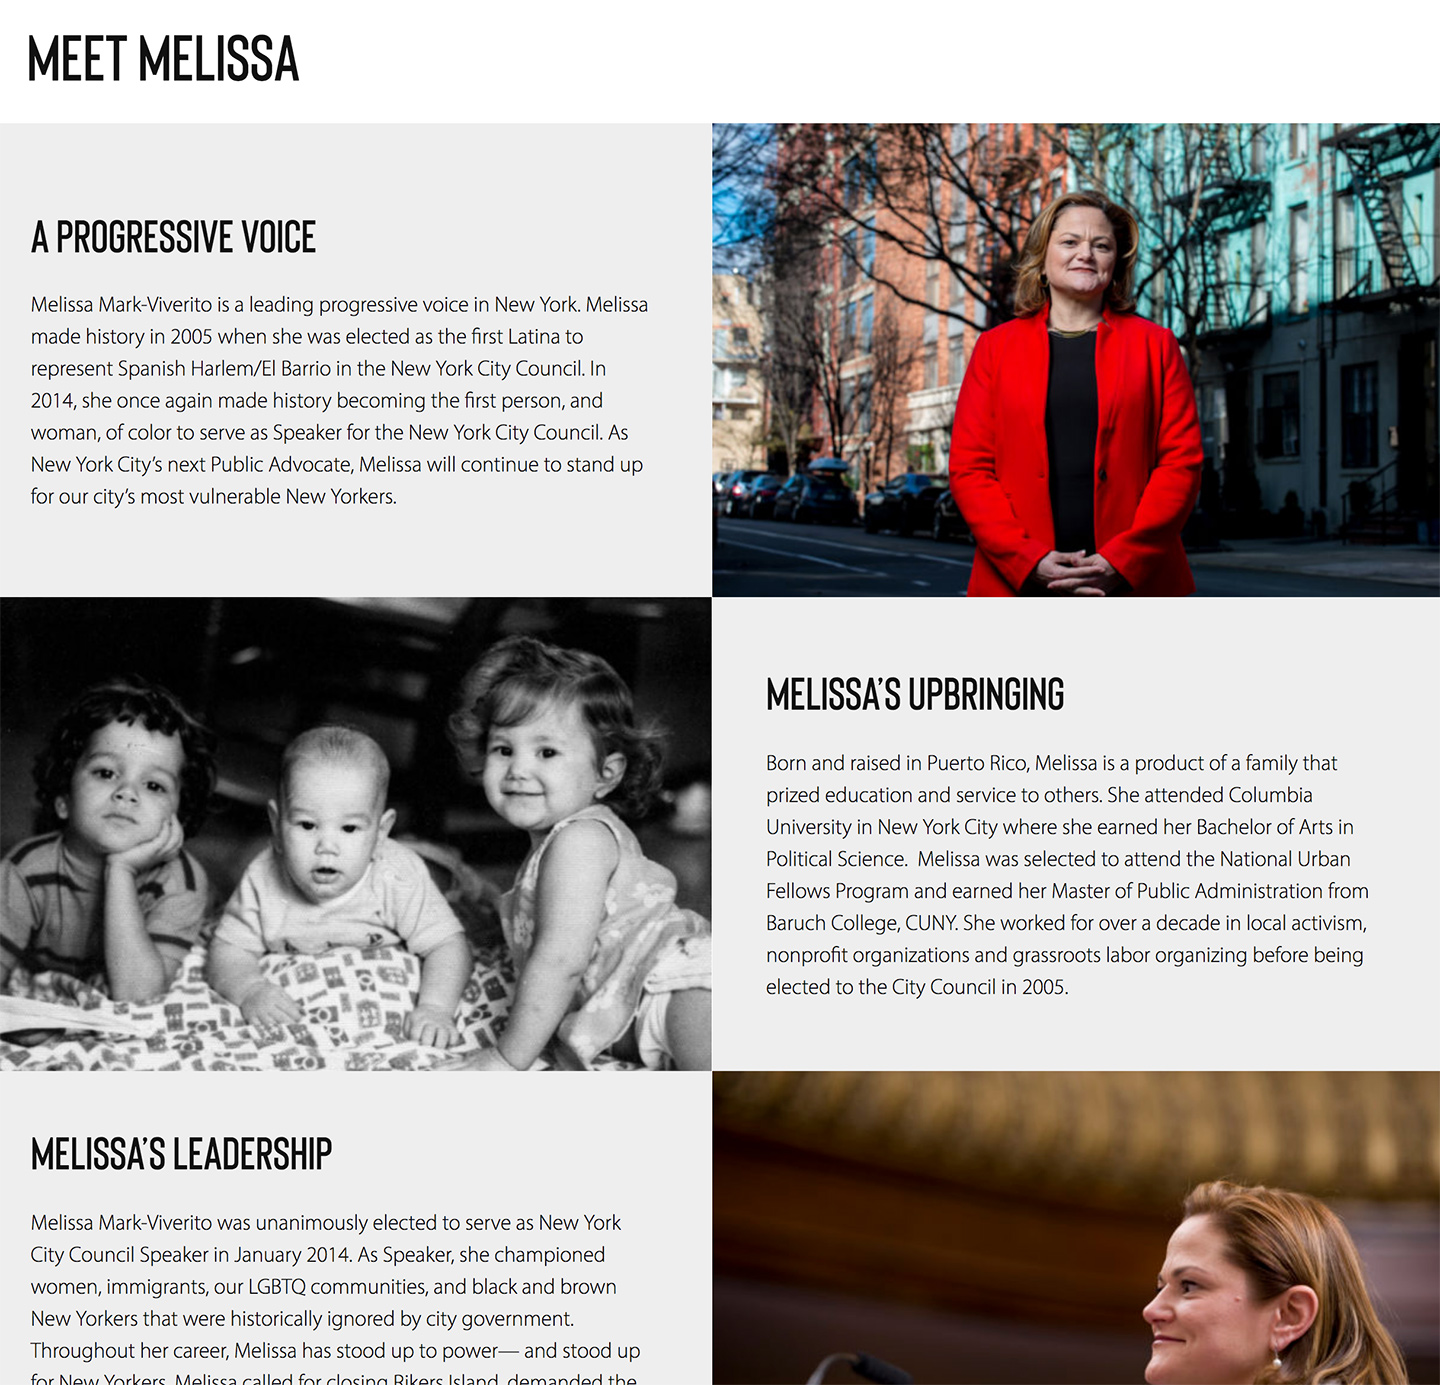 Melissa Mark-Viverito for Public Advocate: Meet Melissa - A Timeline of Mark-Viverito's life and accomplishments